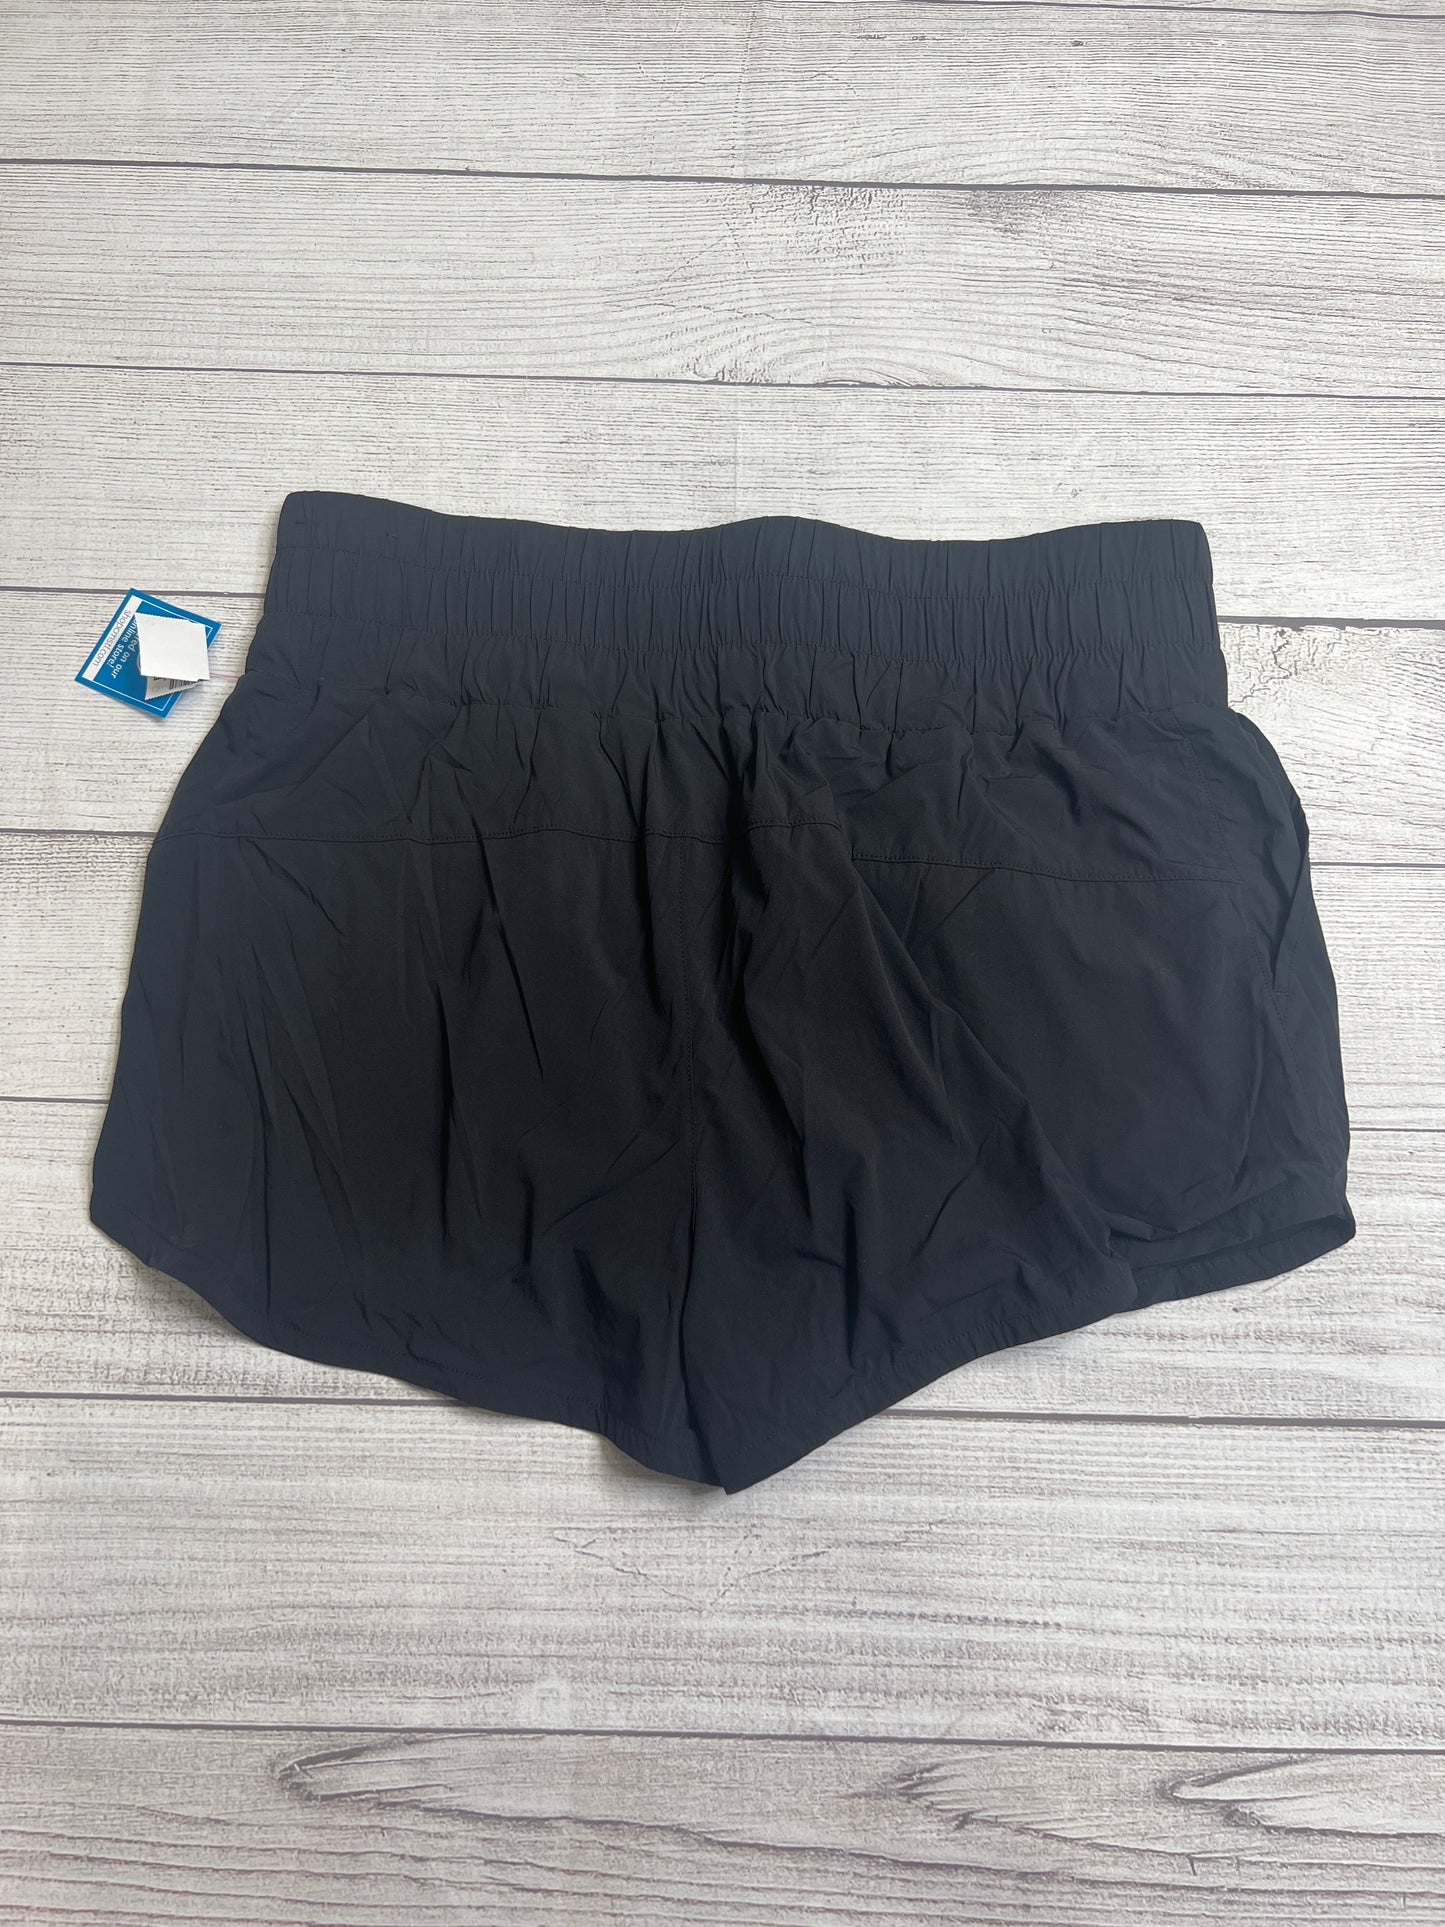 Athletic Shorts By Joy Lab  Size: L